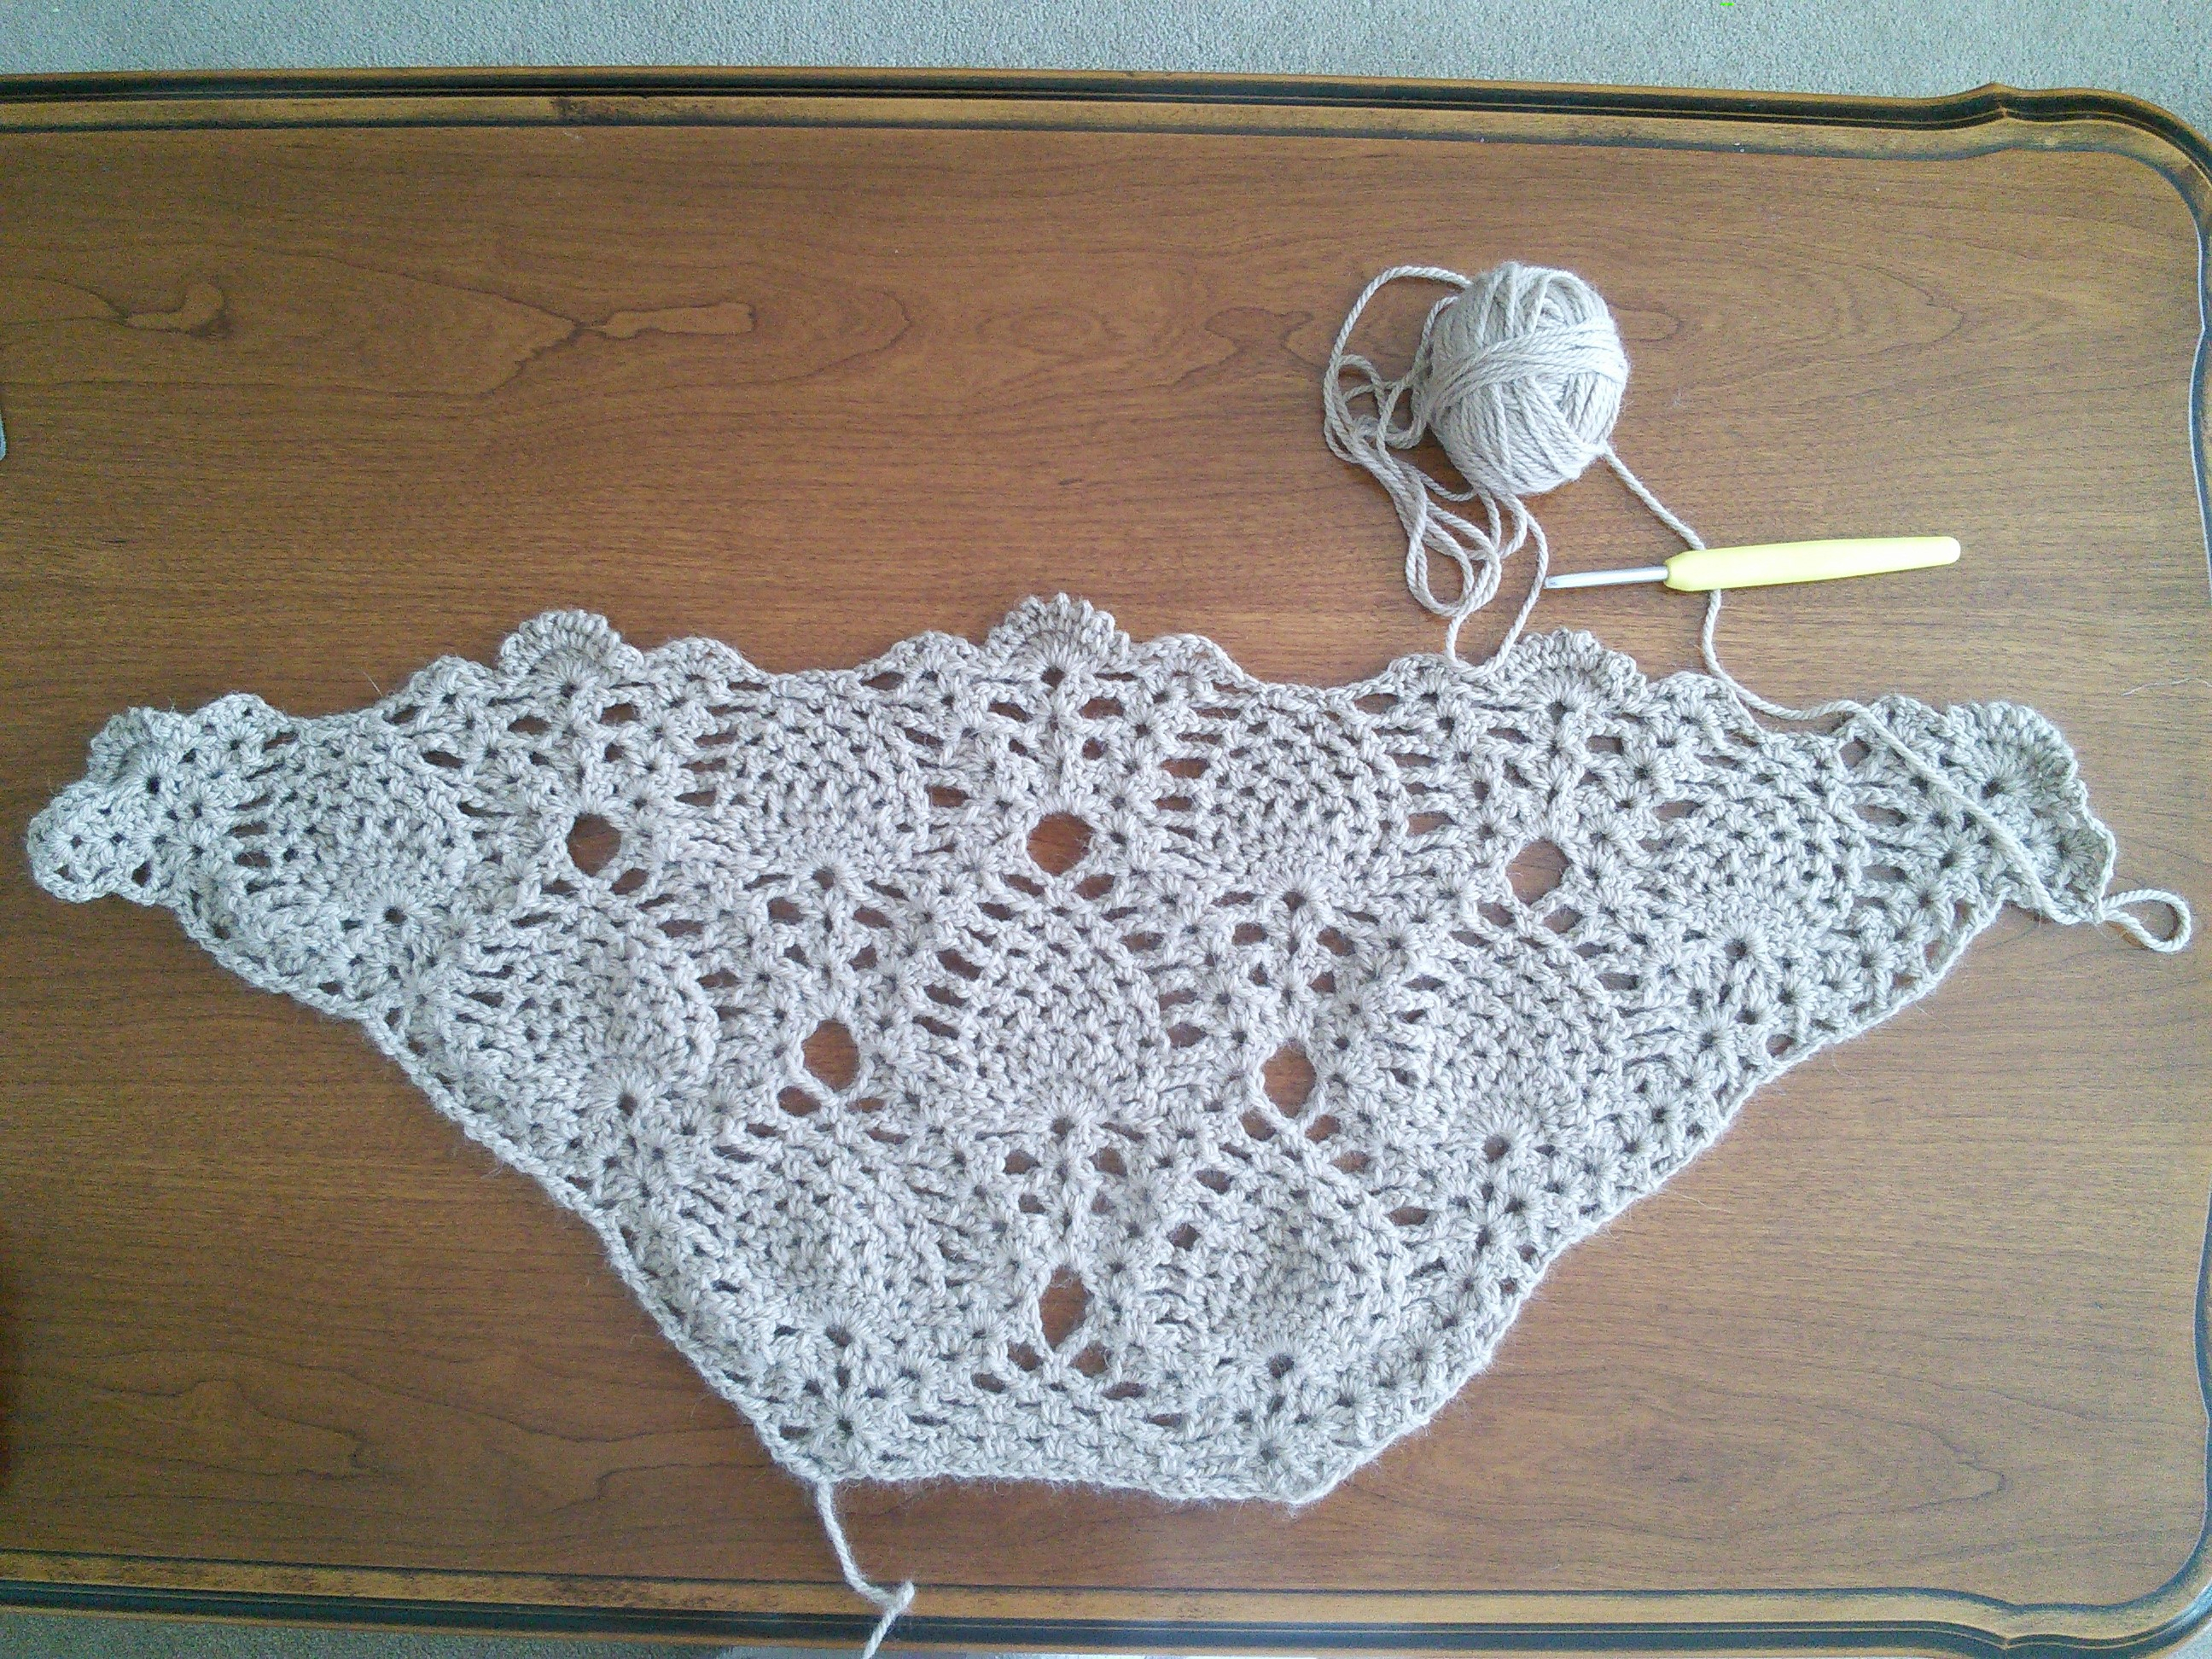 Pineapple Crochet Shawl Pattern Two New Projects Pineapple Shawl And Sunshine Coat Natalie Warner